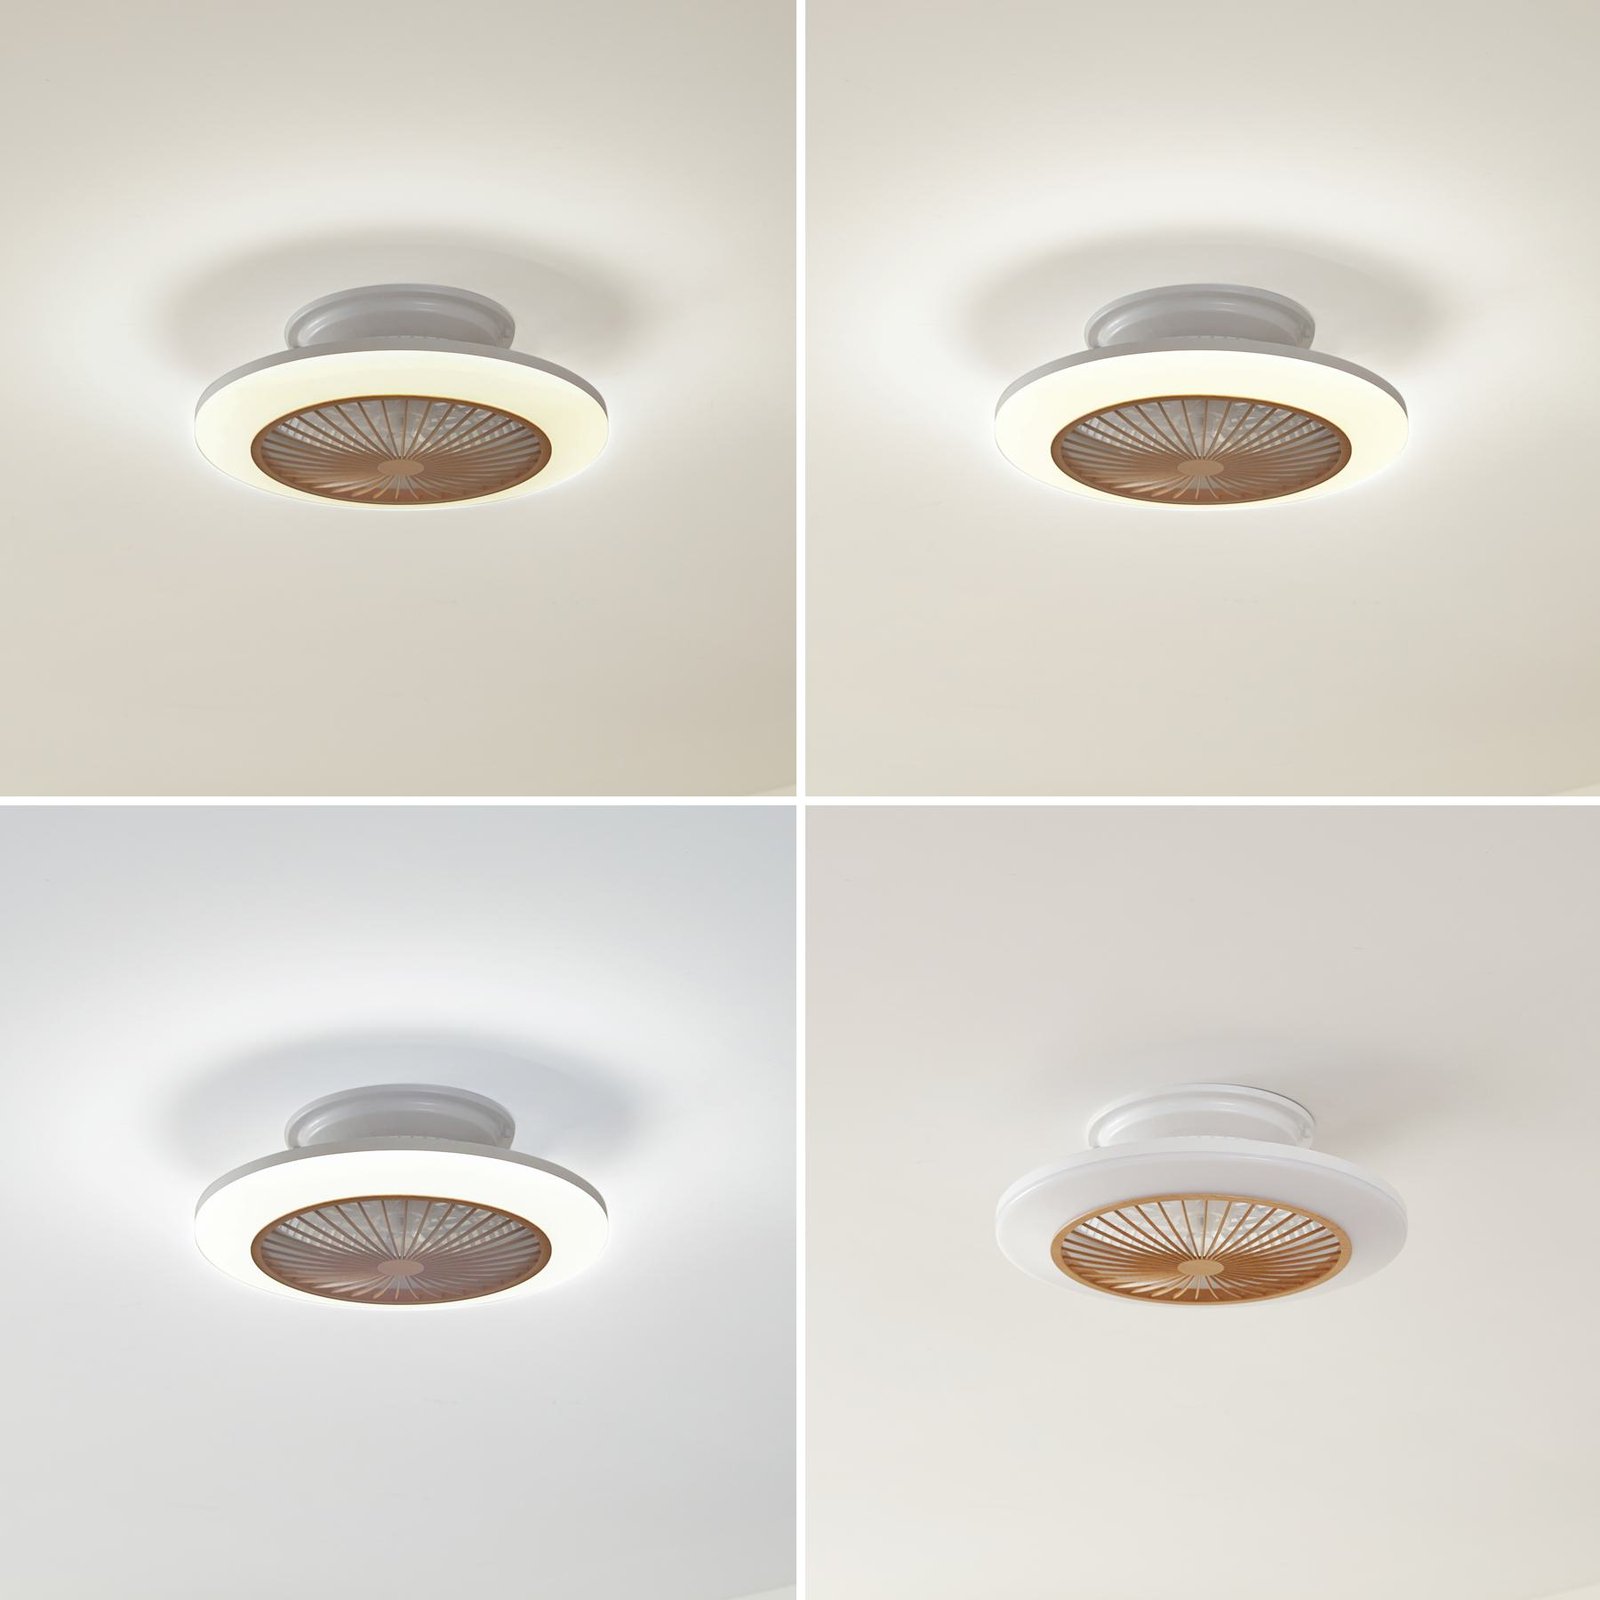 Lindby LED-loftventilator Mamuti, træfarvet, støjsvag, 55 cm